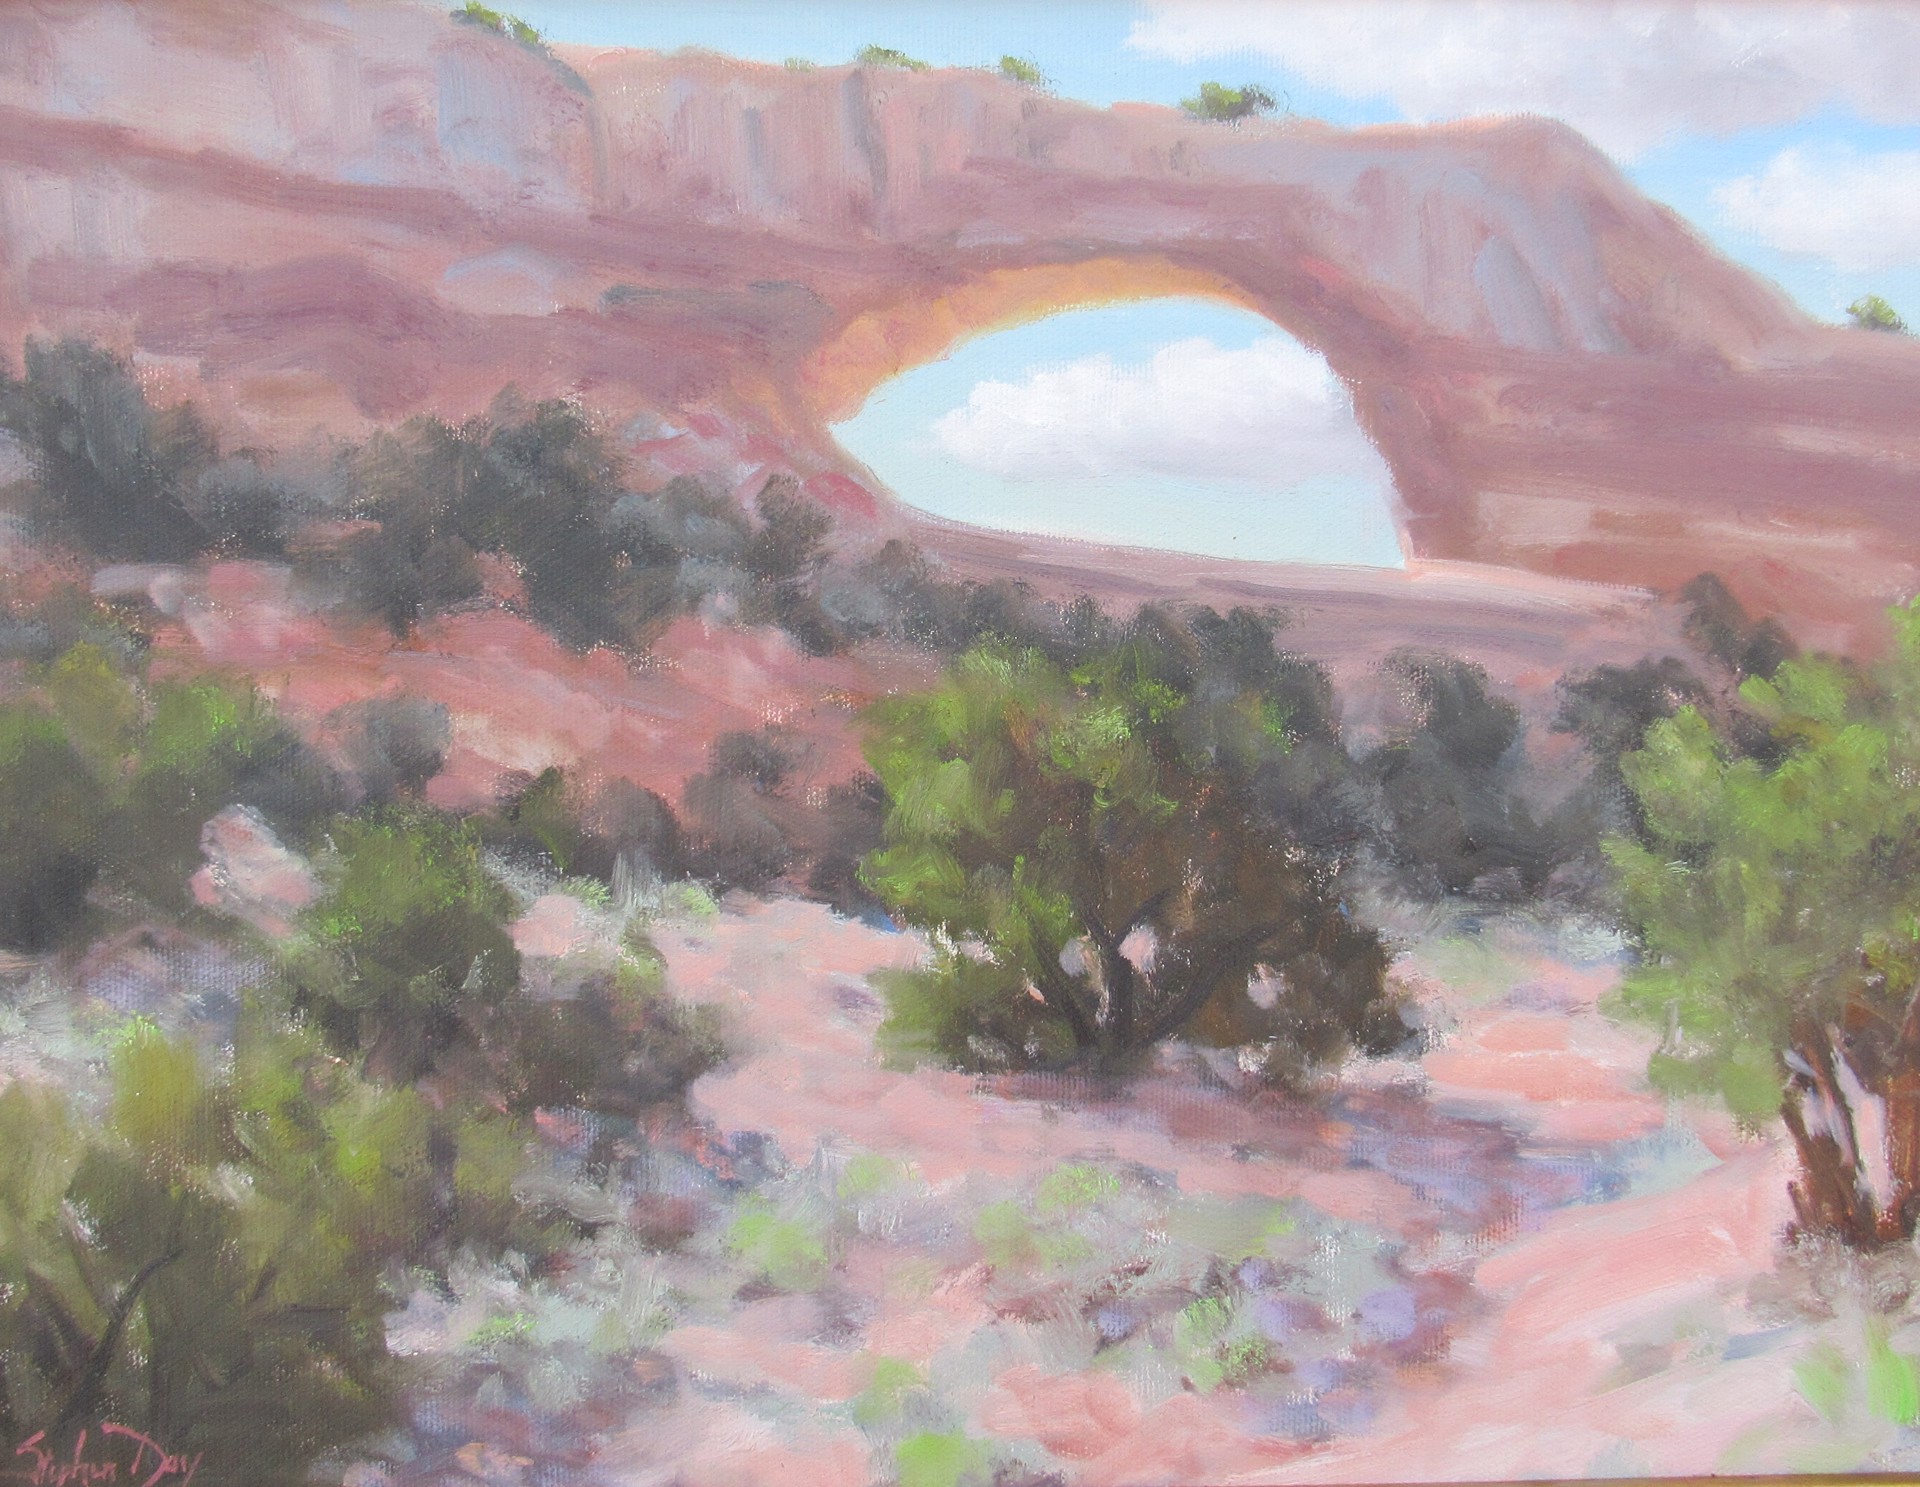 Wilson Arch Near Moab, Utah by Stephen Day